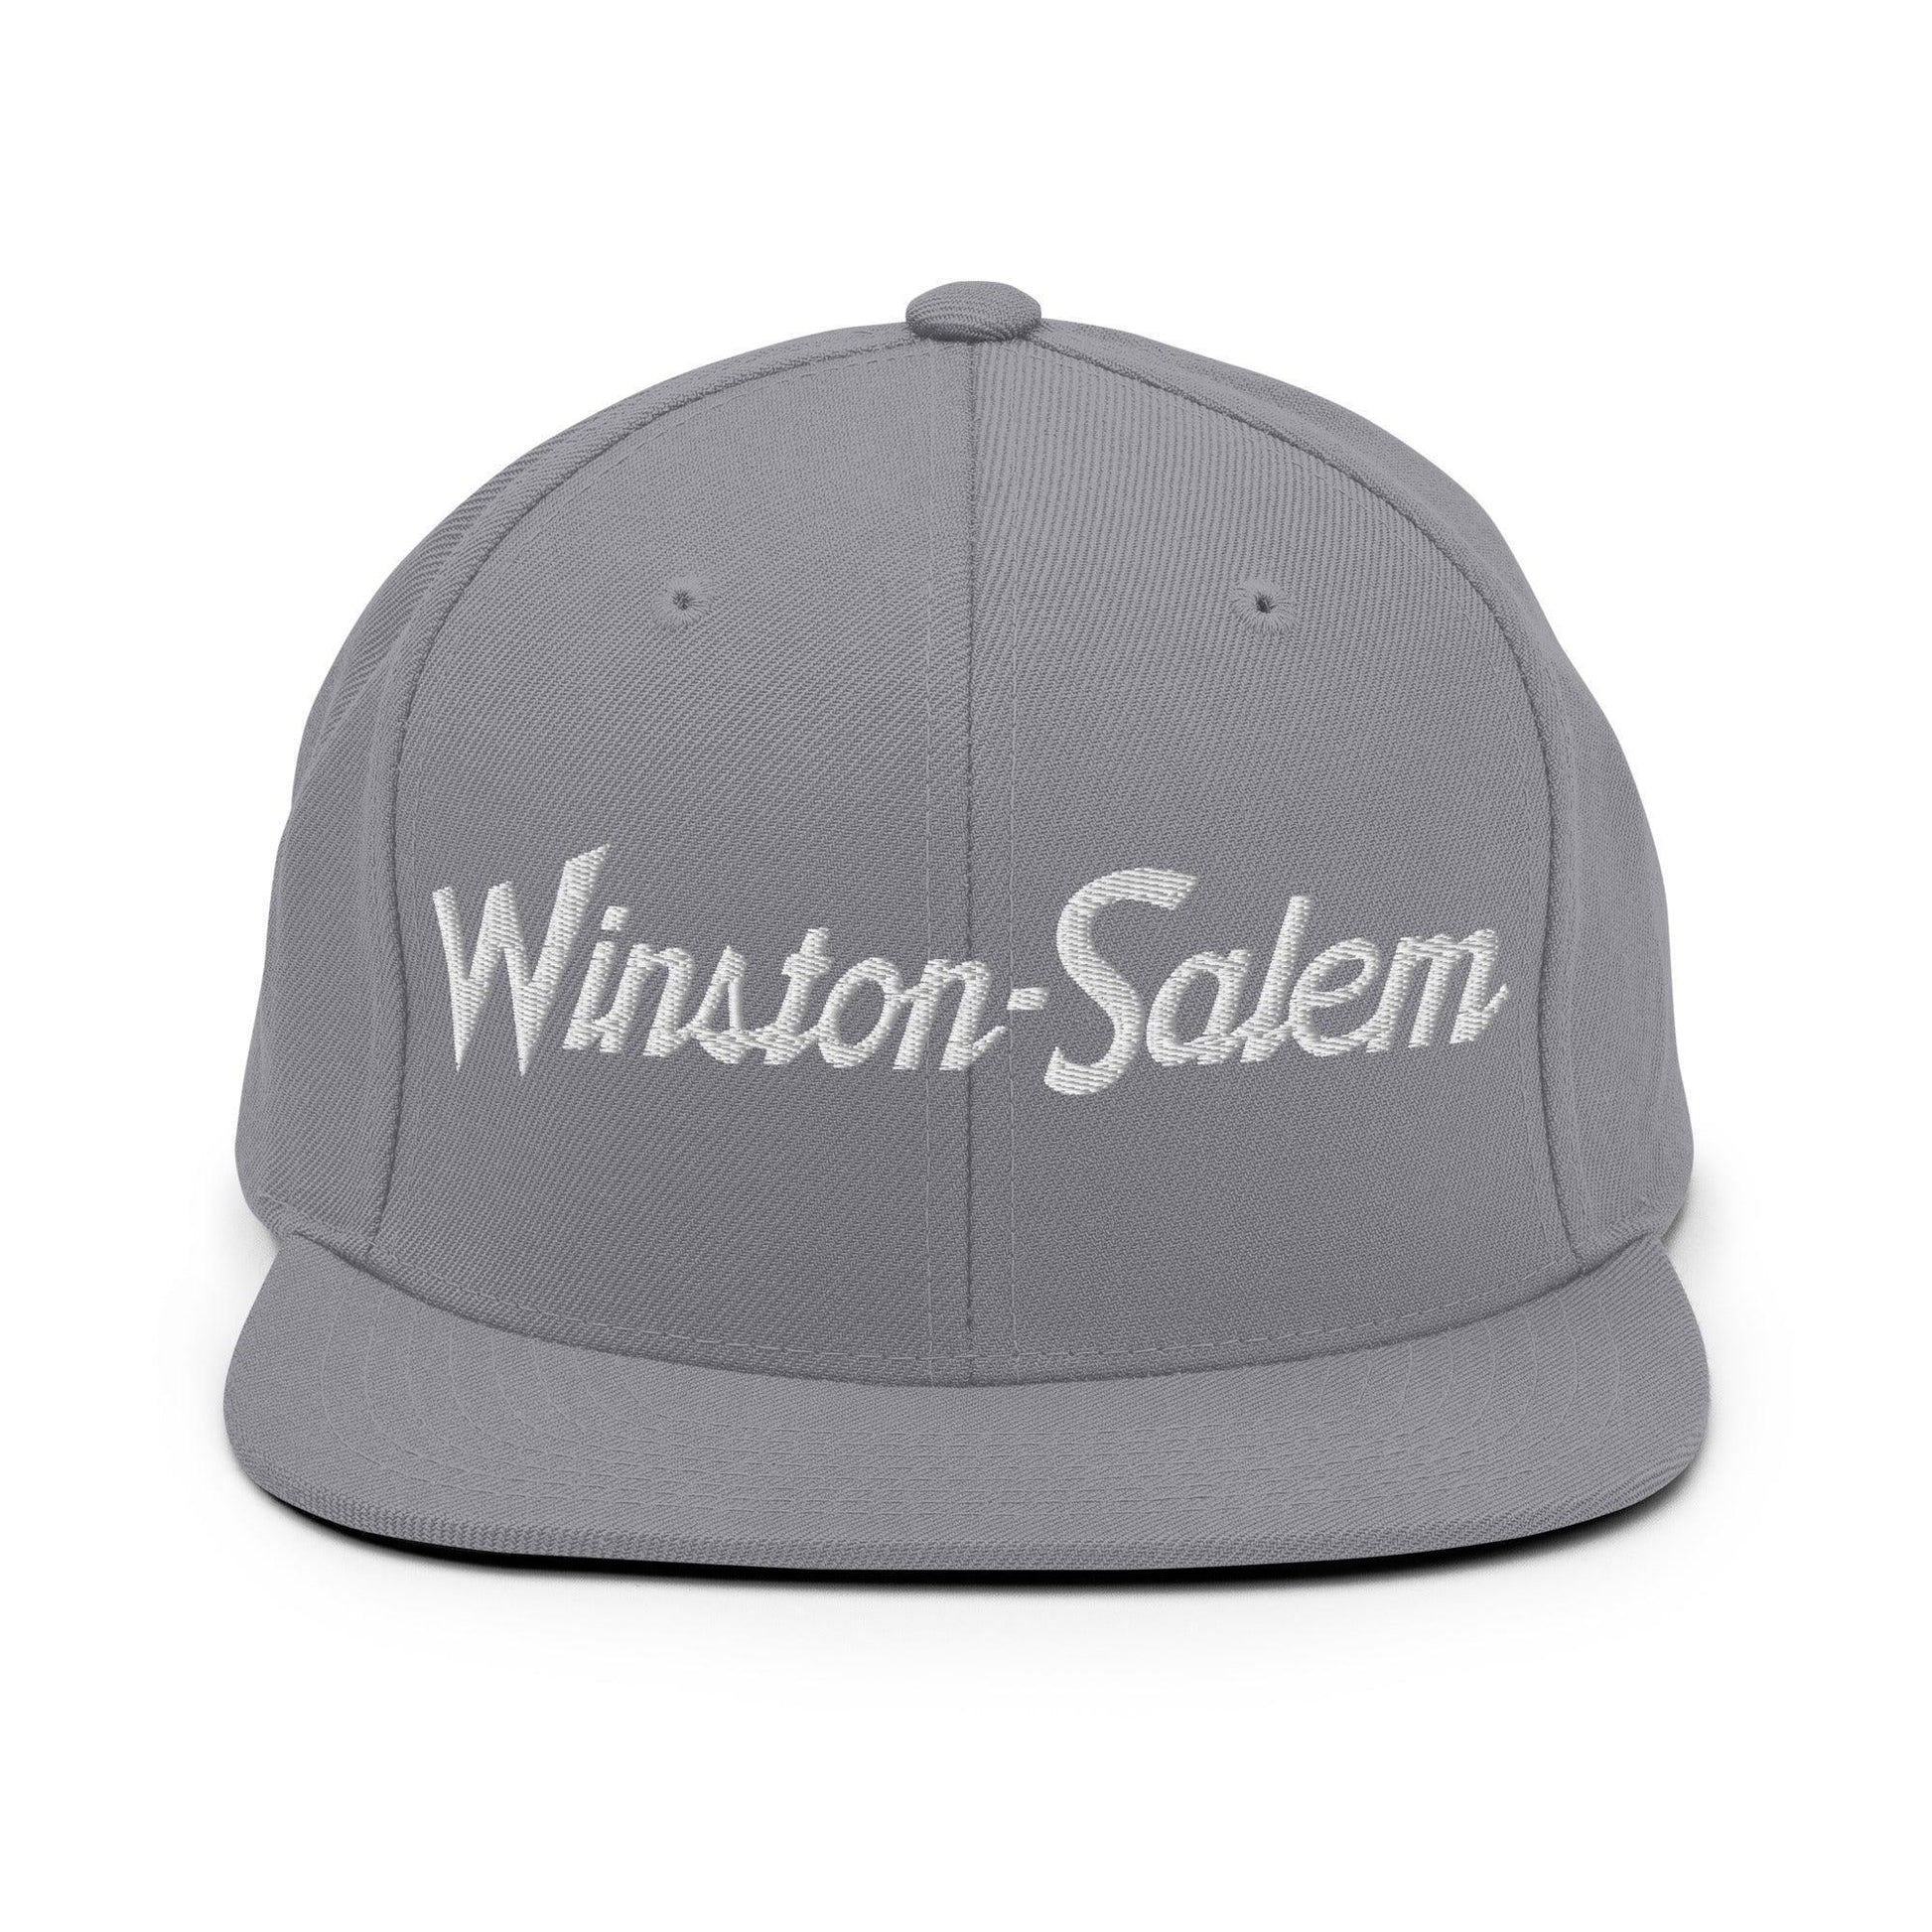 Winston-Salem Script Snapback Hat Silver